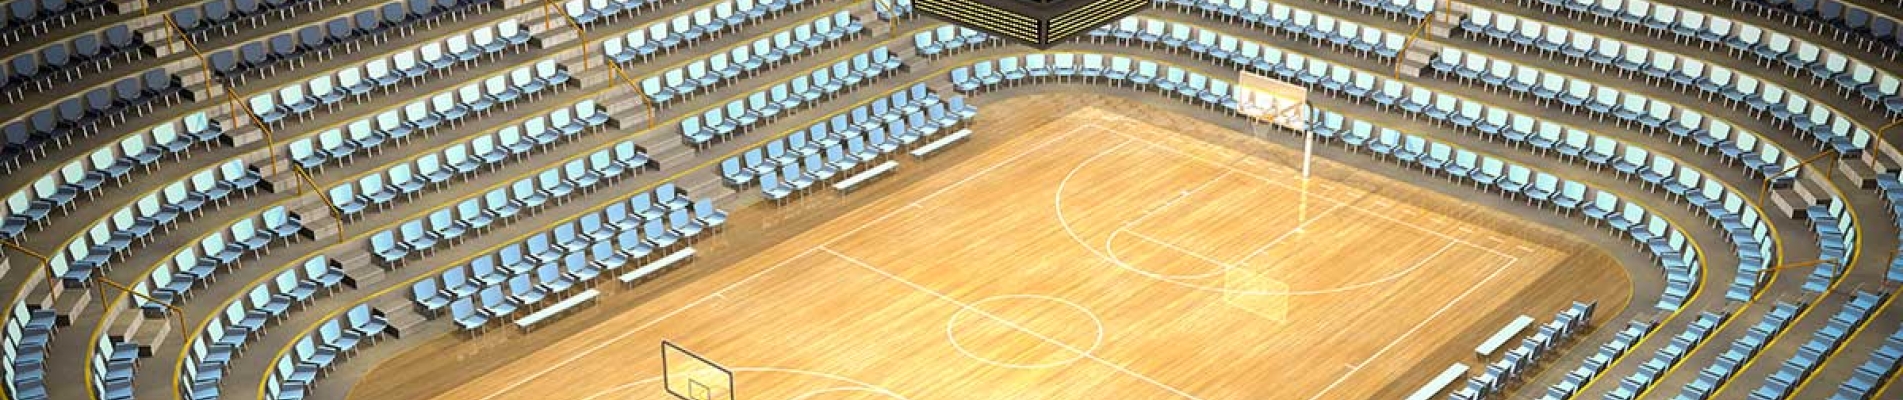 Indoor Basketball Court Construction